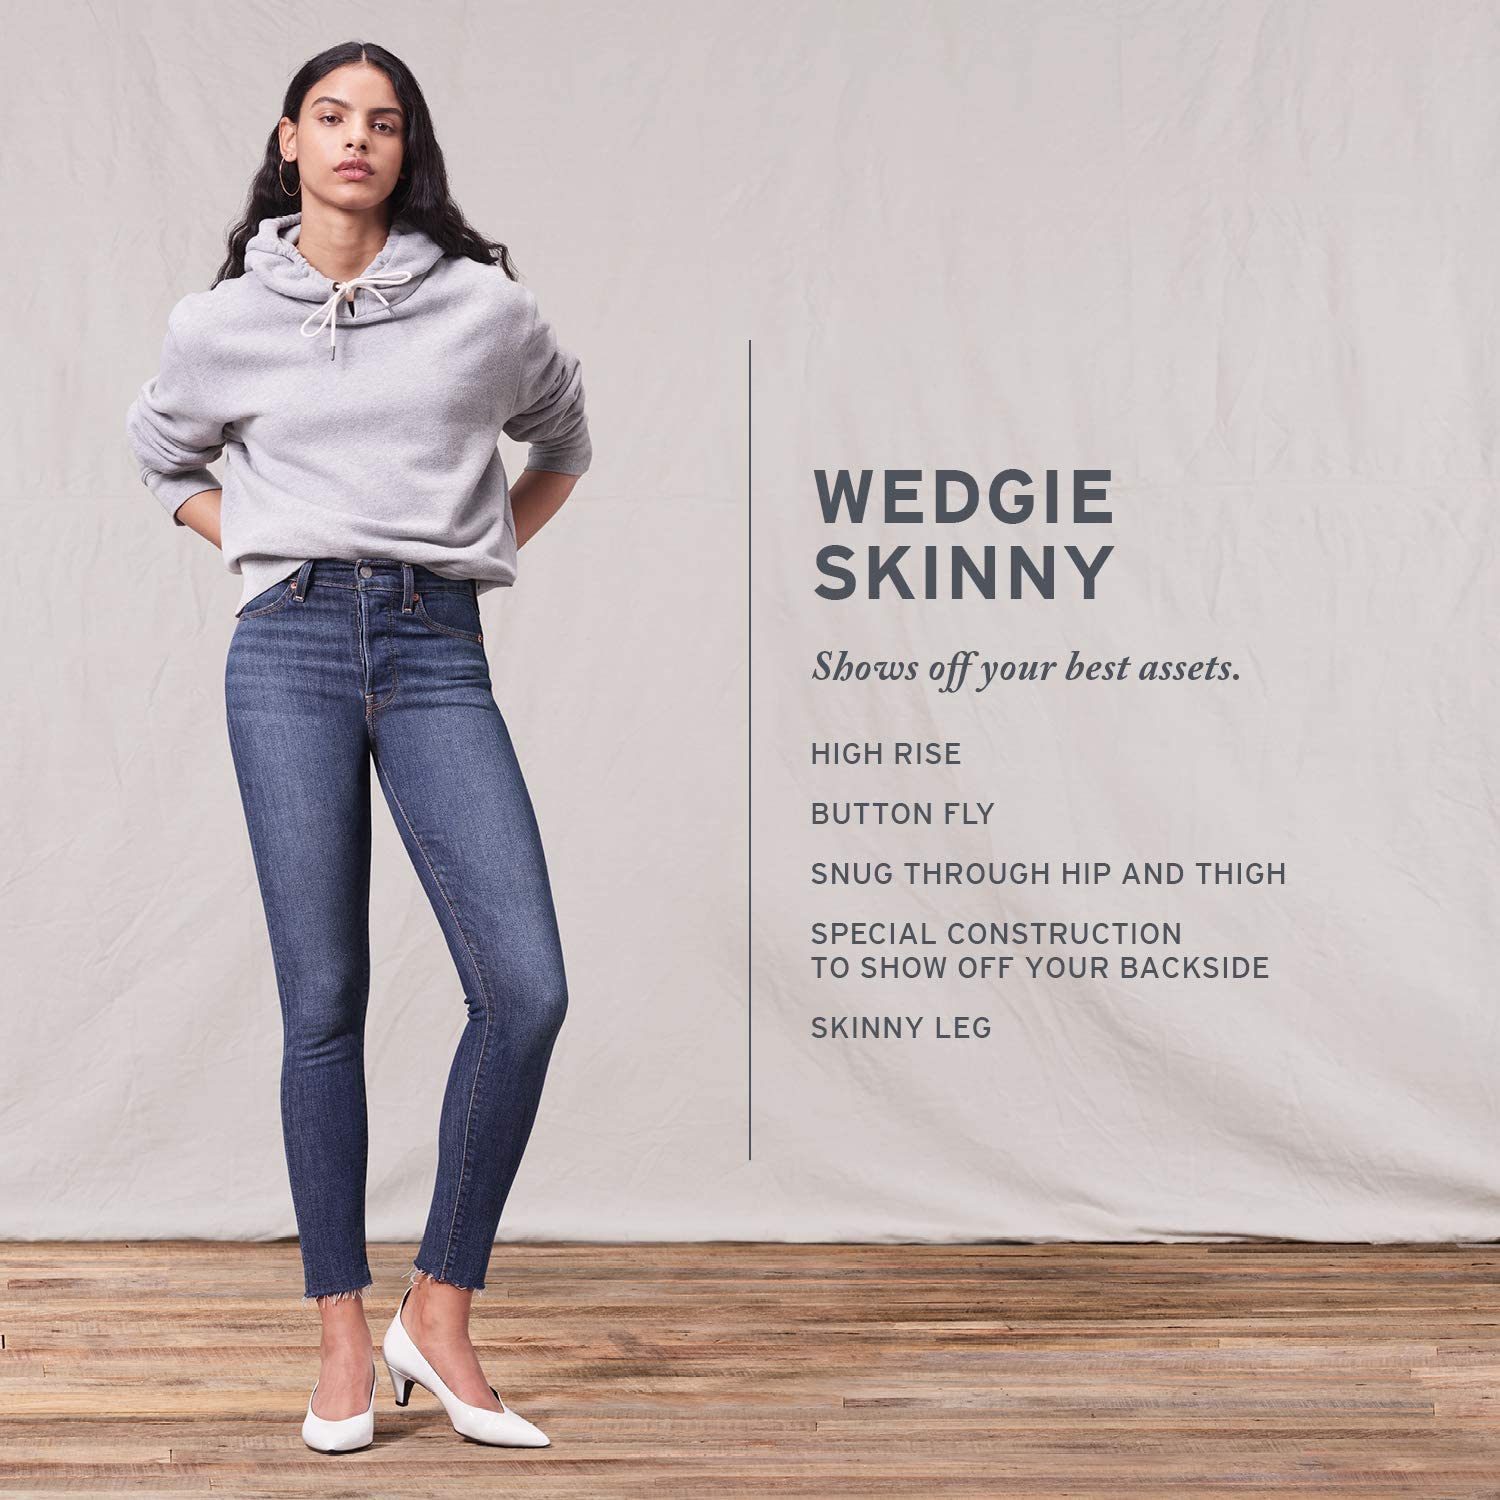 Levi's Women's Wedgie Skinny Jeans | eBay